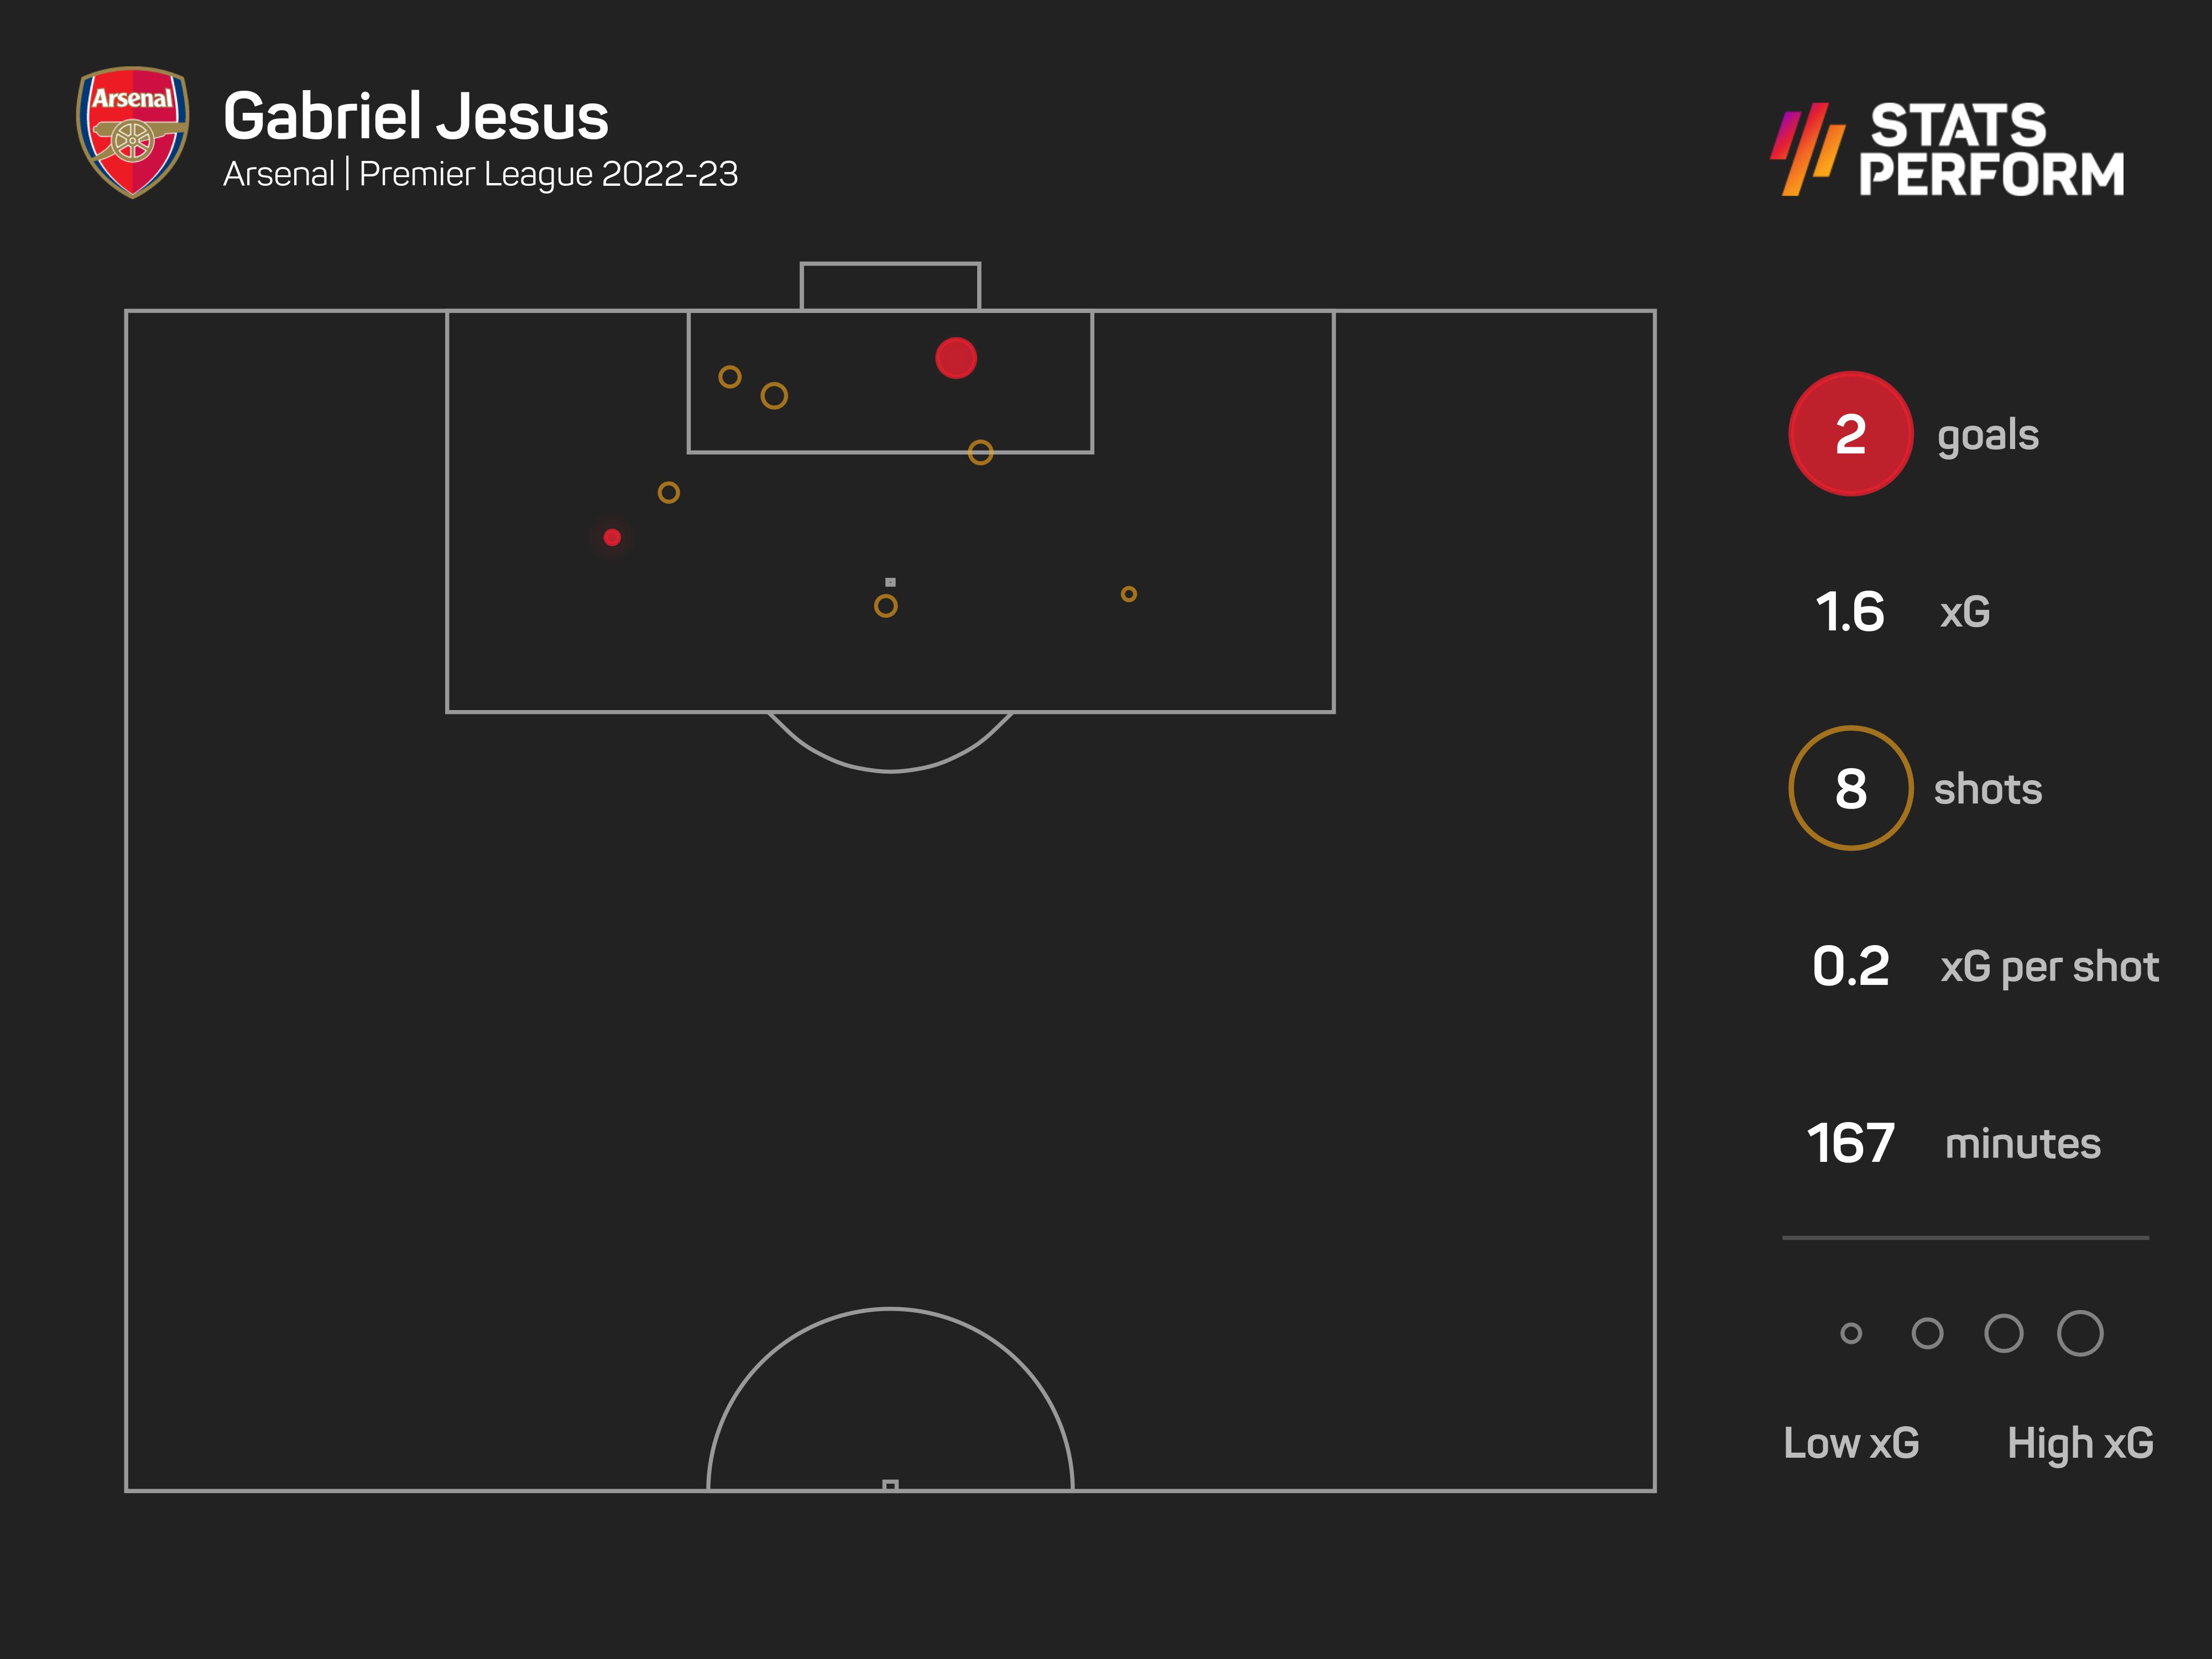 Gabriel Jesus has made a big impact at Arsenal